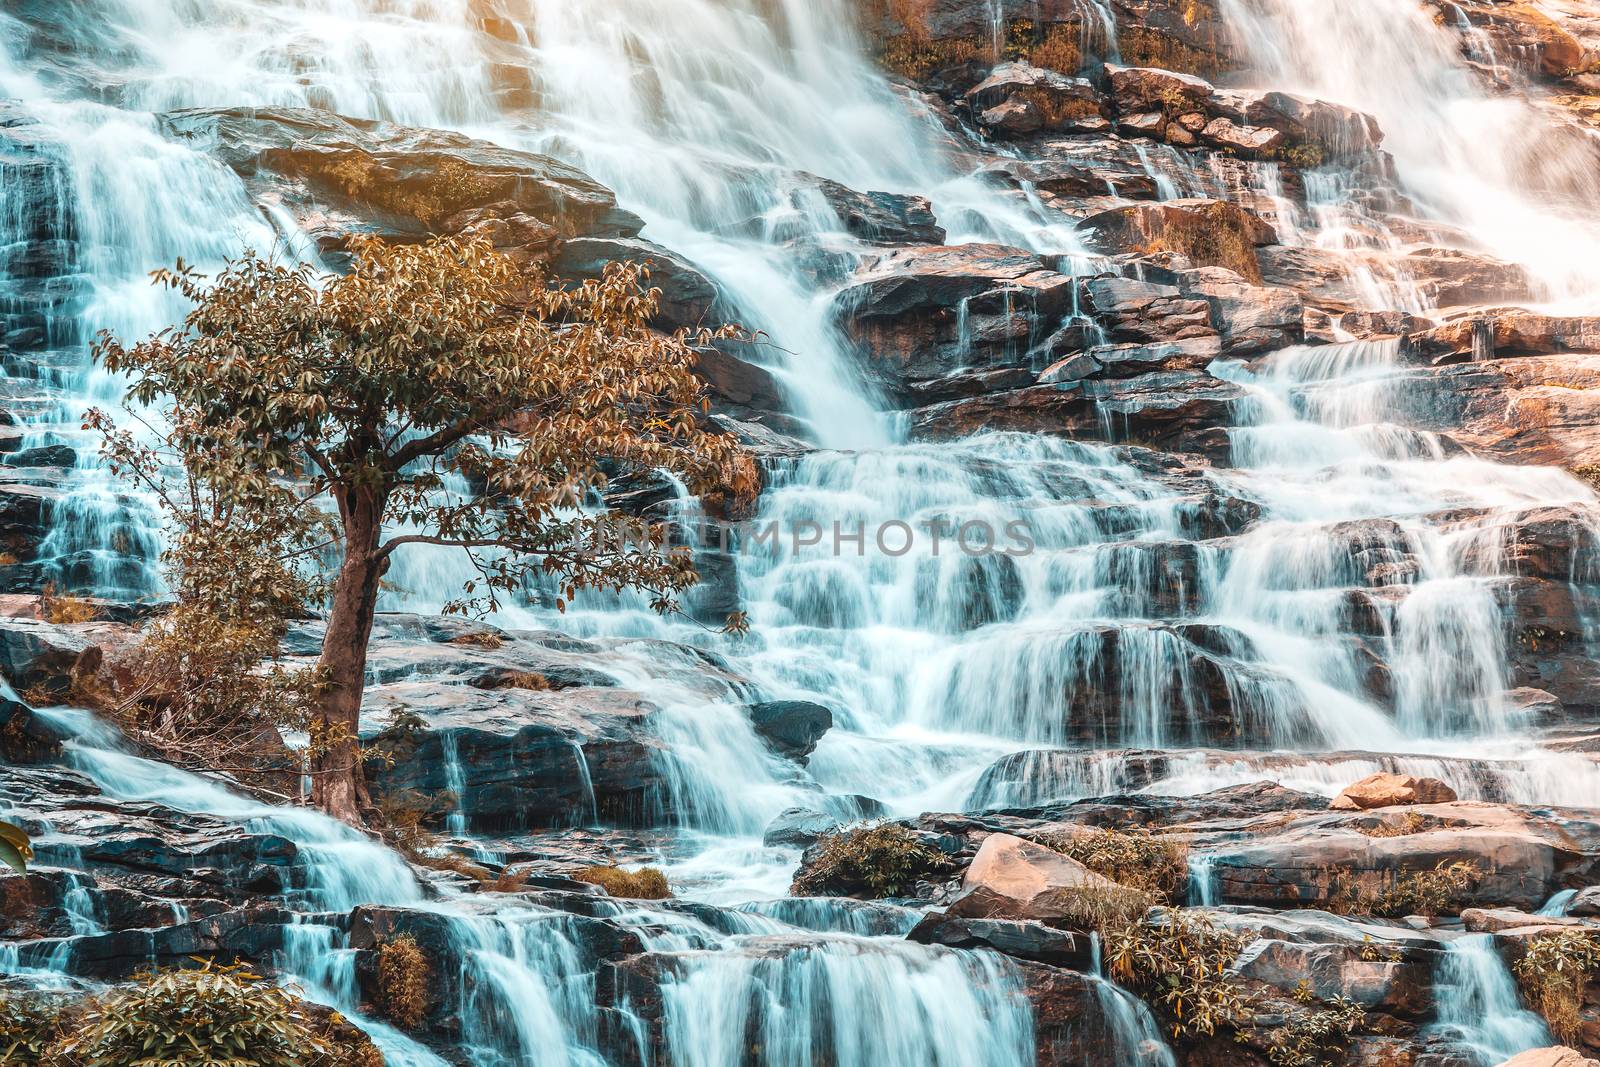 Mae Ya Waterfall Doi Inthanon, Chiang Mai Thailand by freedomnaruk